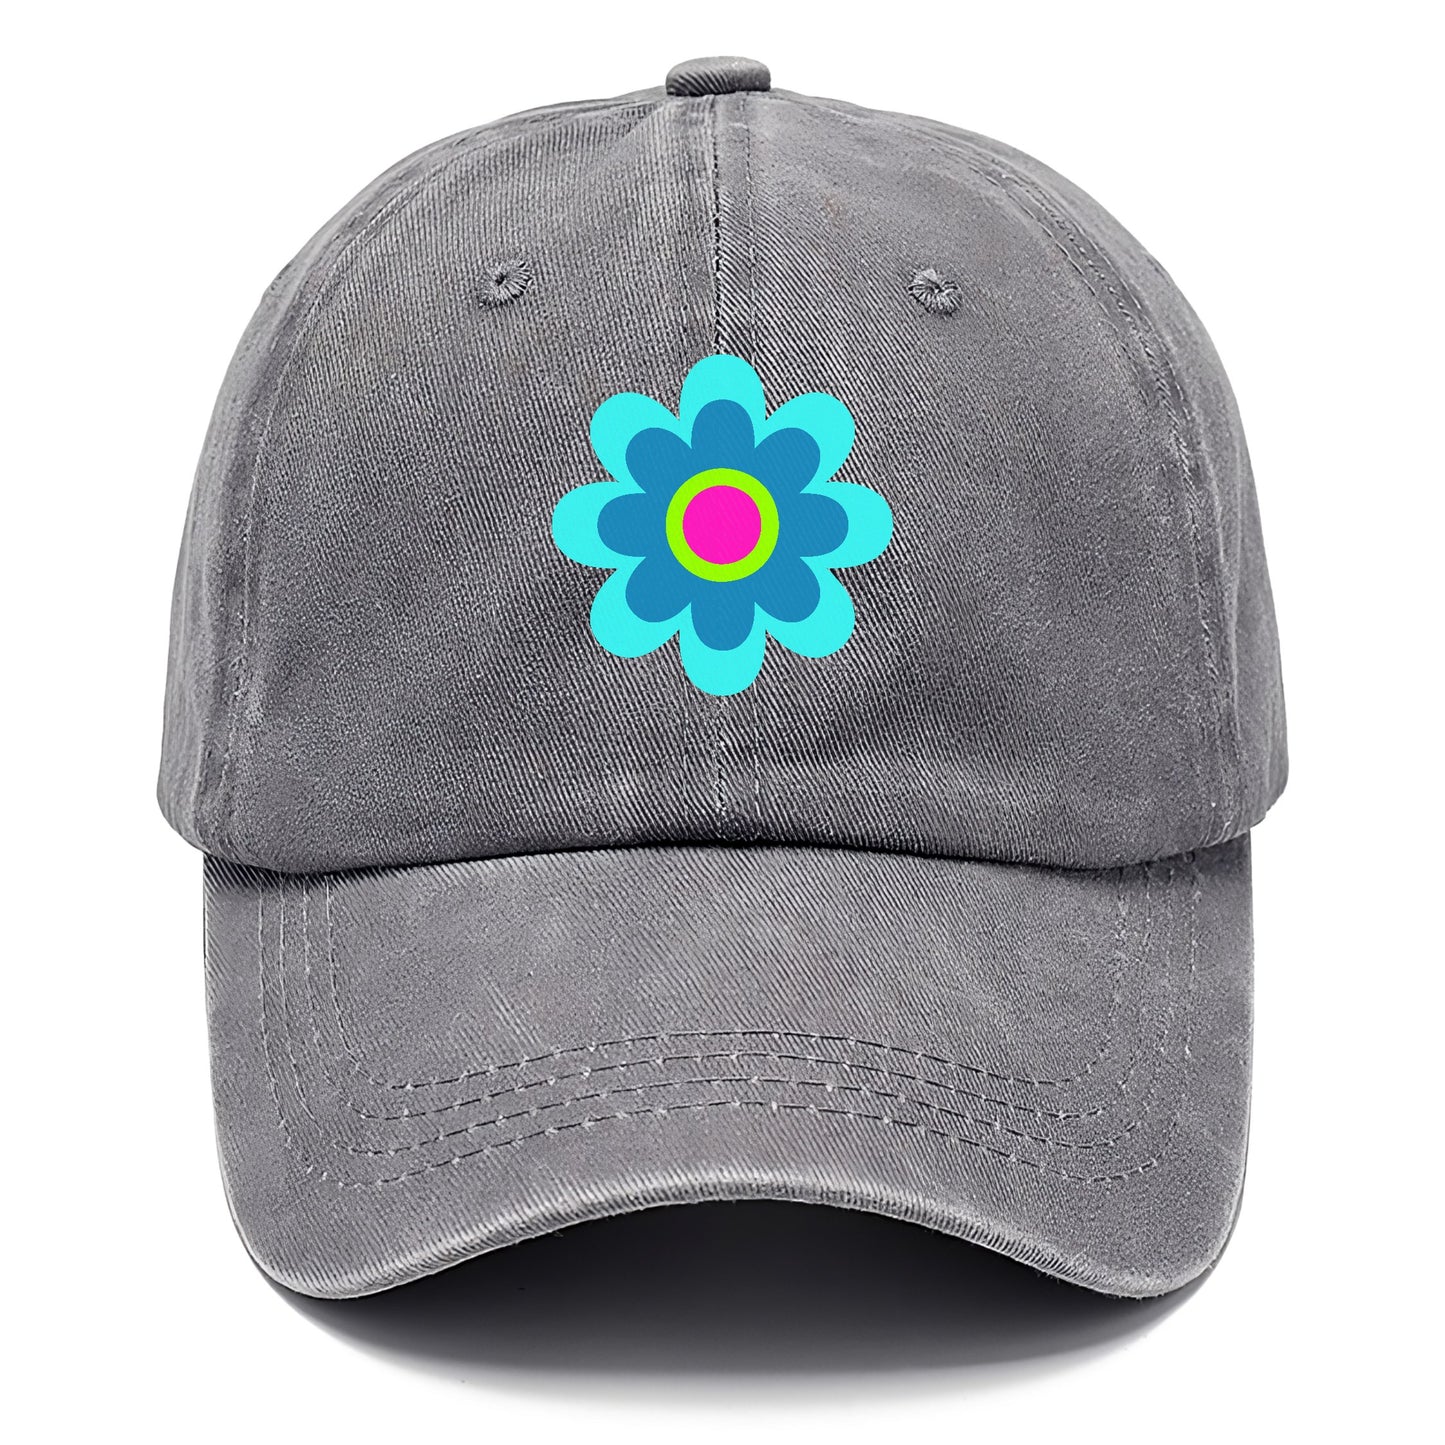 Retro 80s Flower Blue Hat